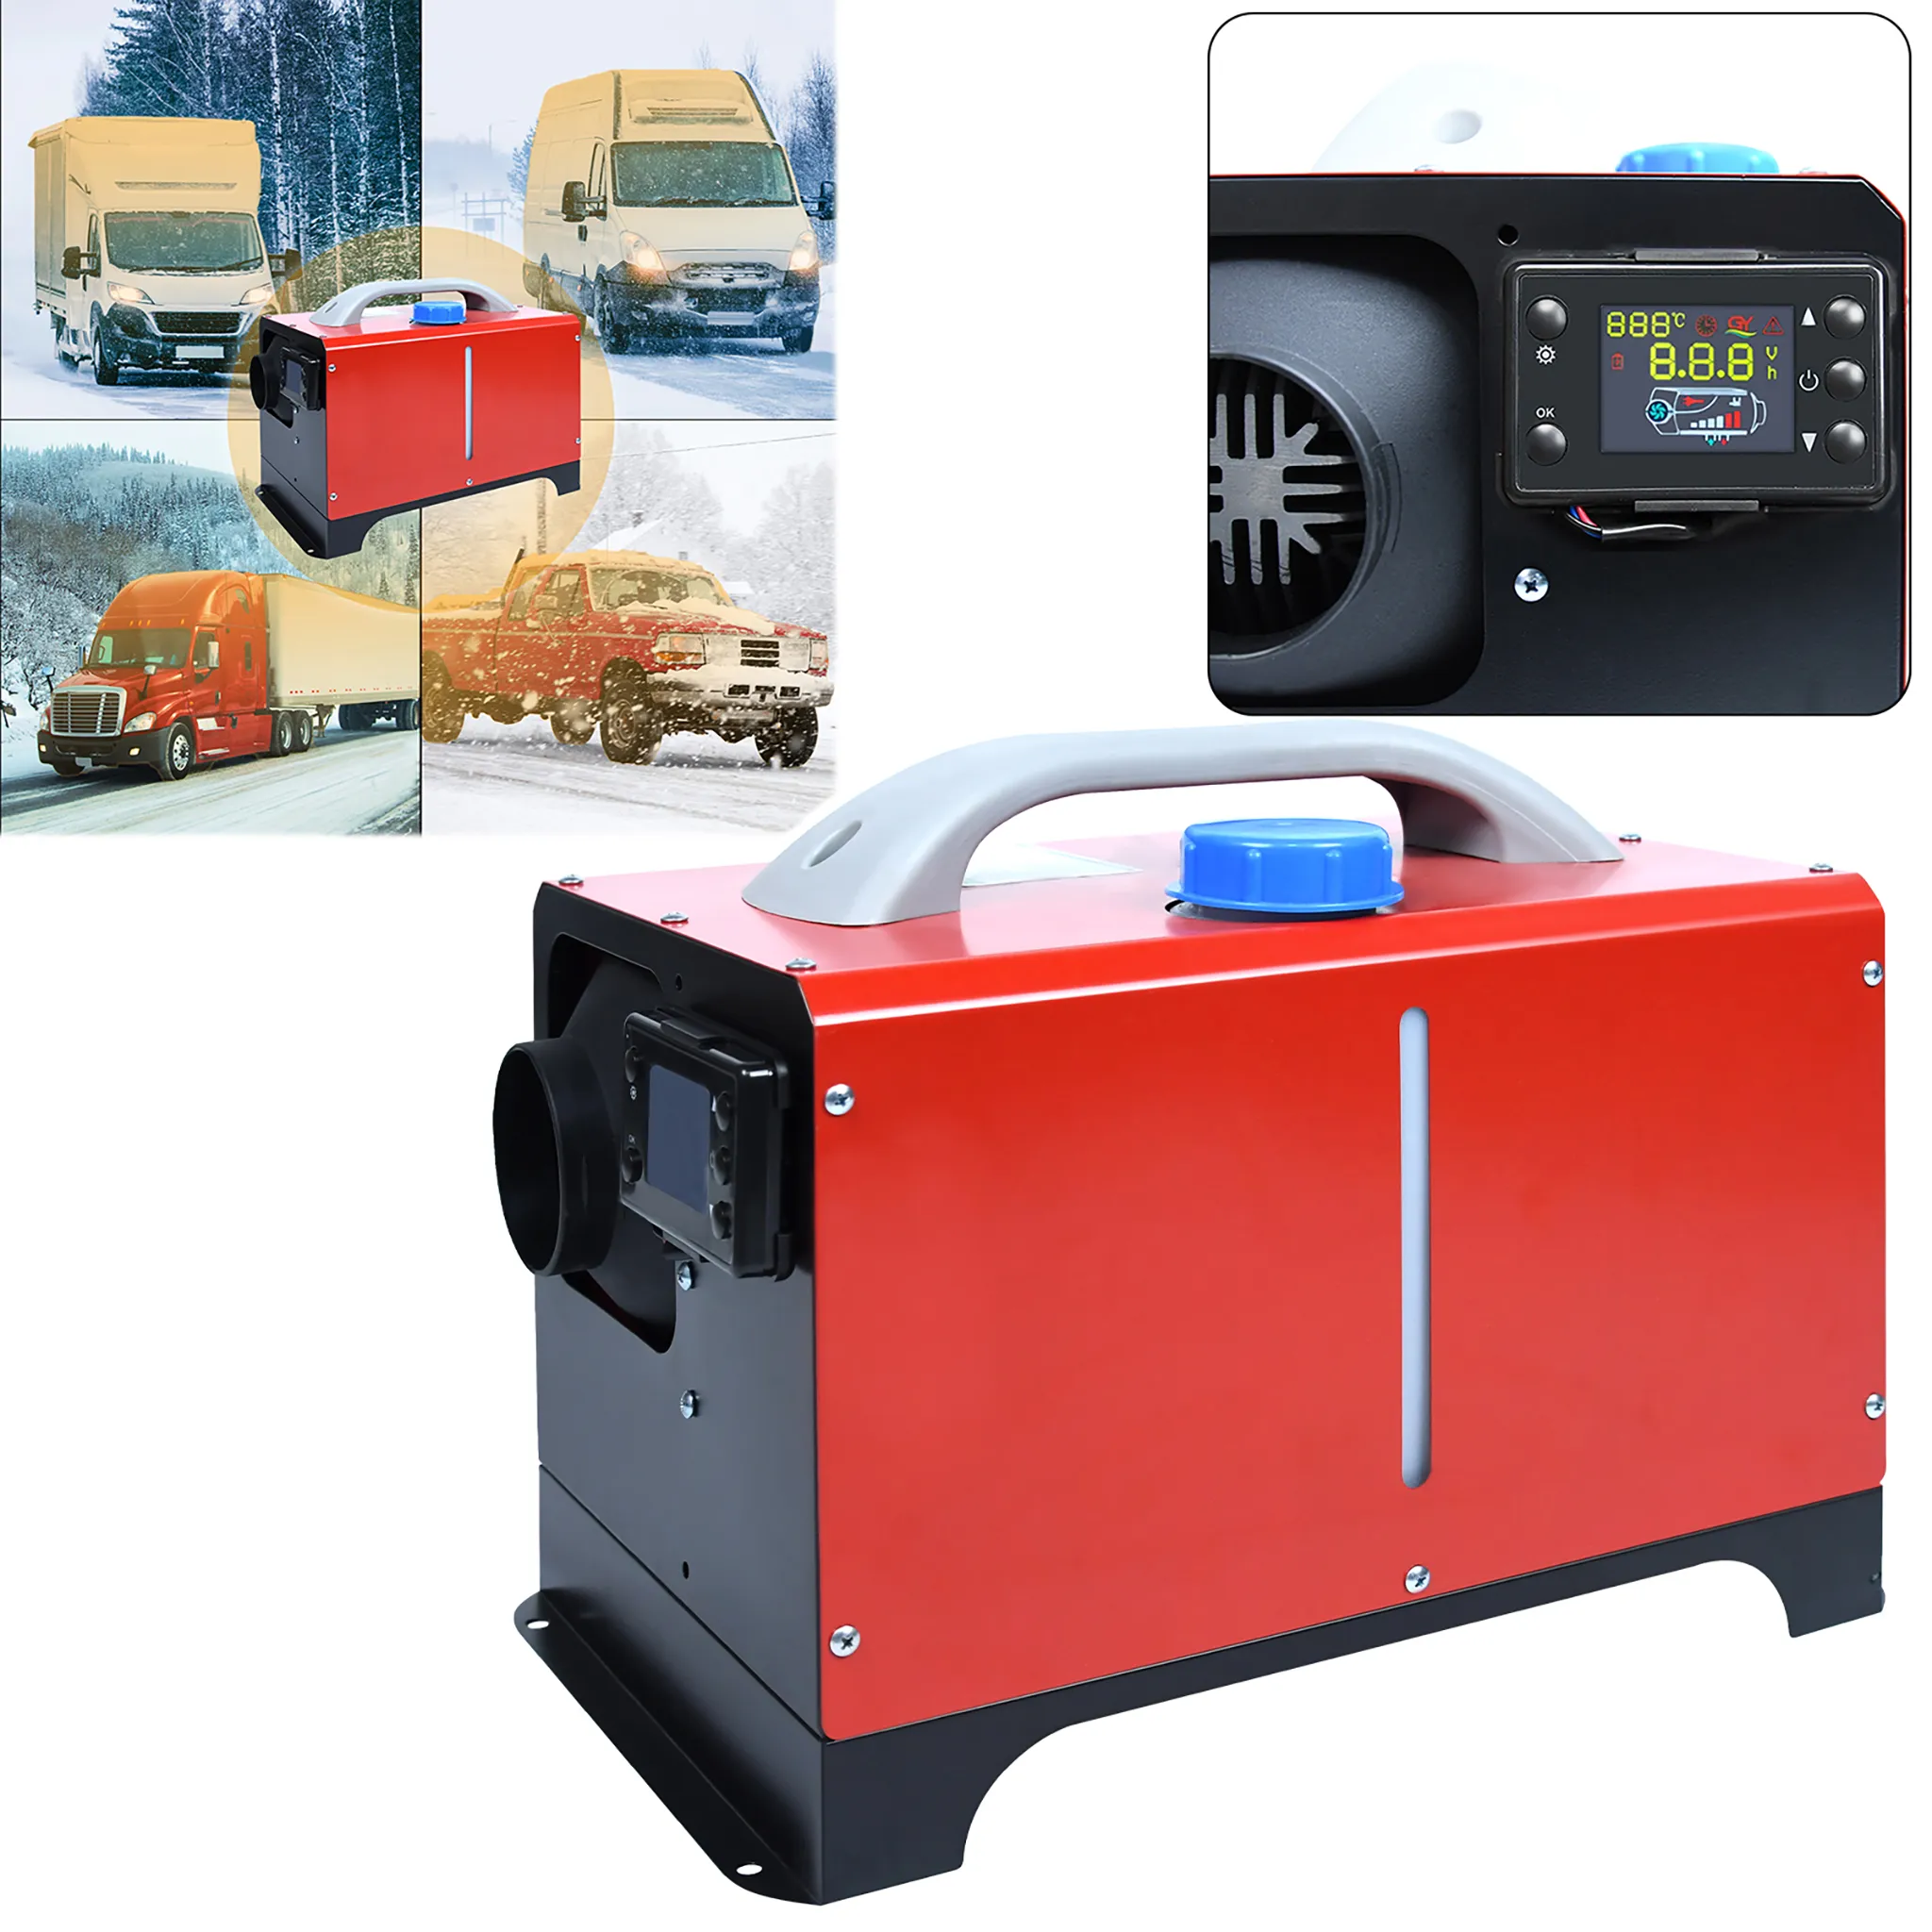 8KW 12V Air Heater Integration Standheizung LCD Diesel Heizung PKW Air  Heater